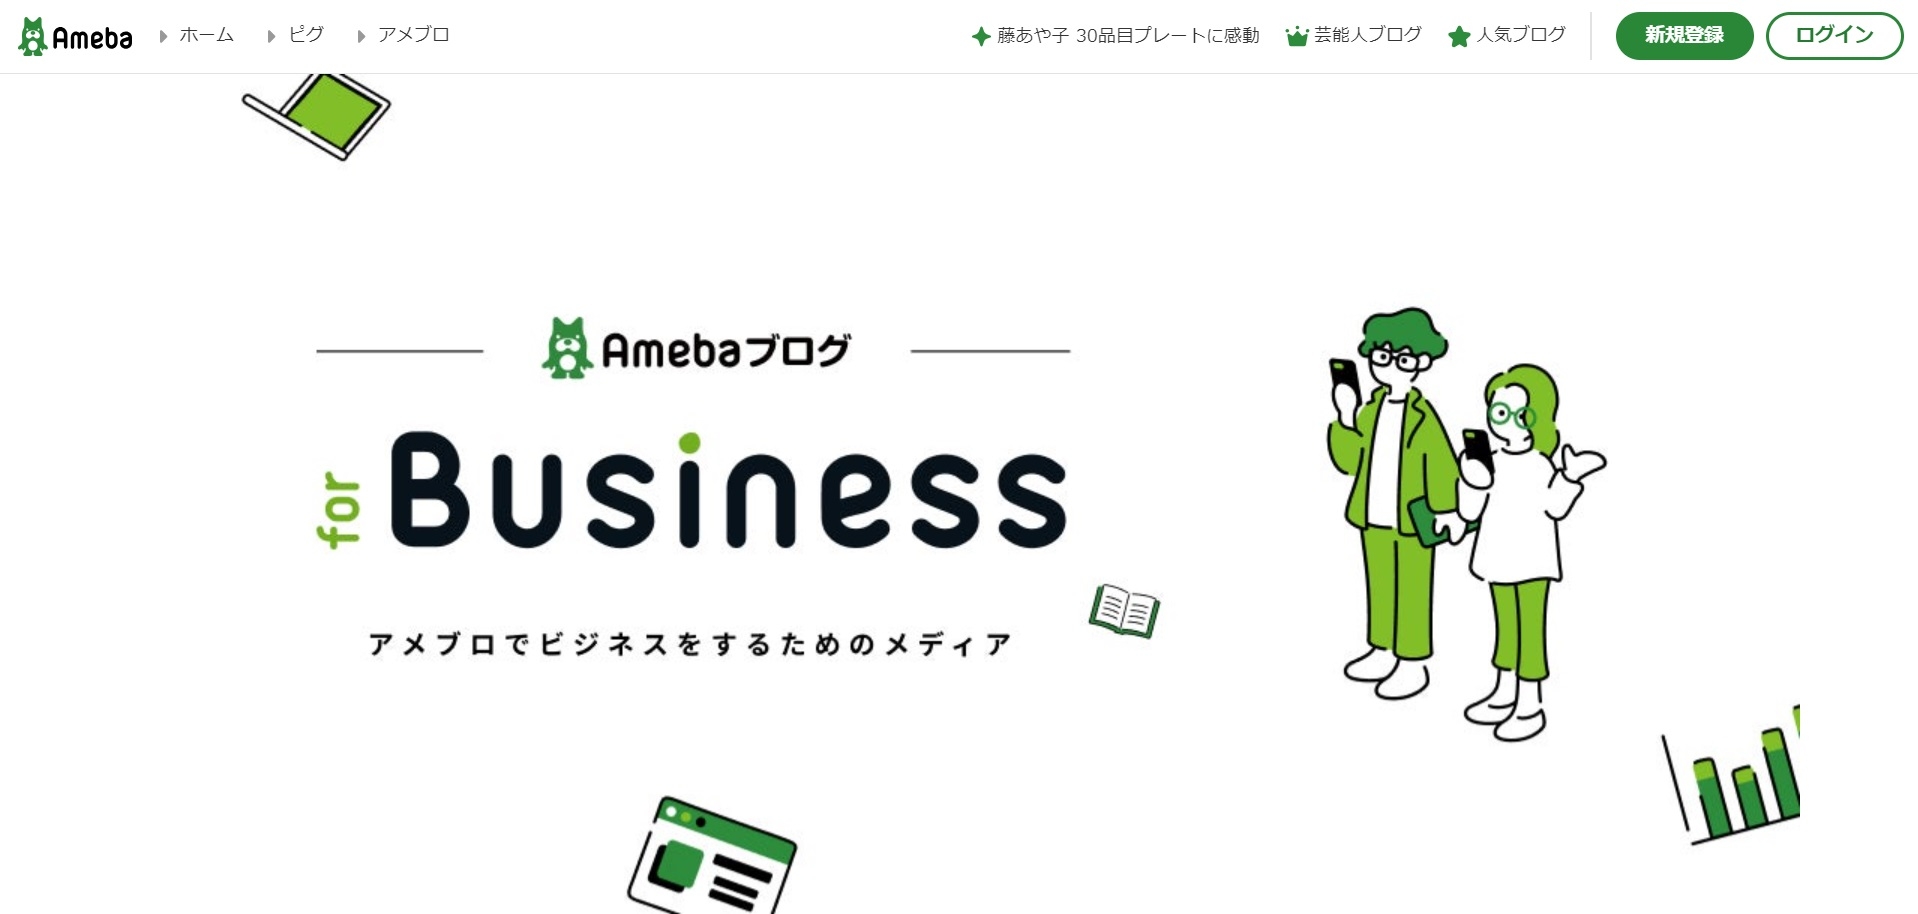 Amebaブログfor Business